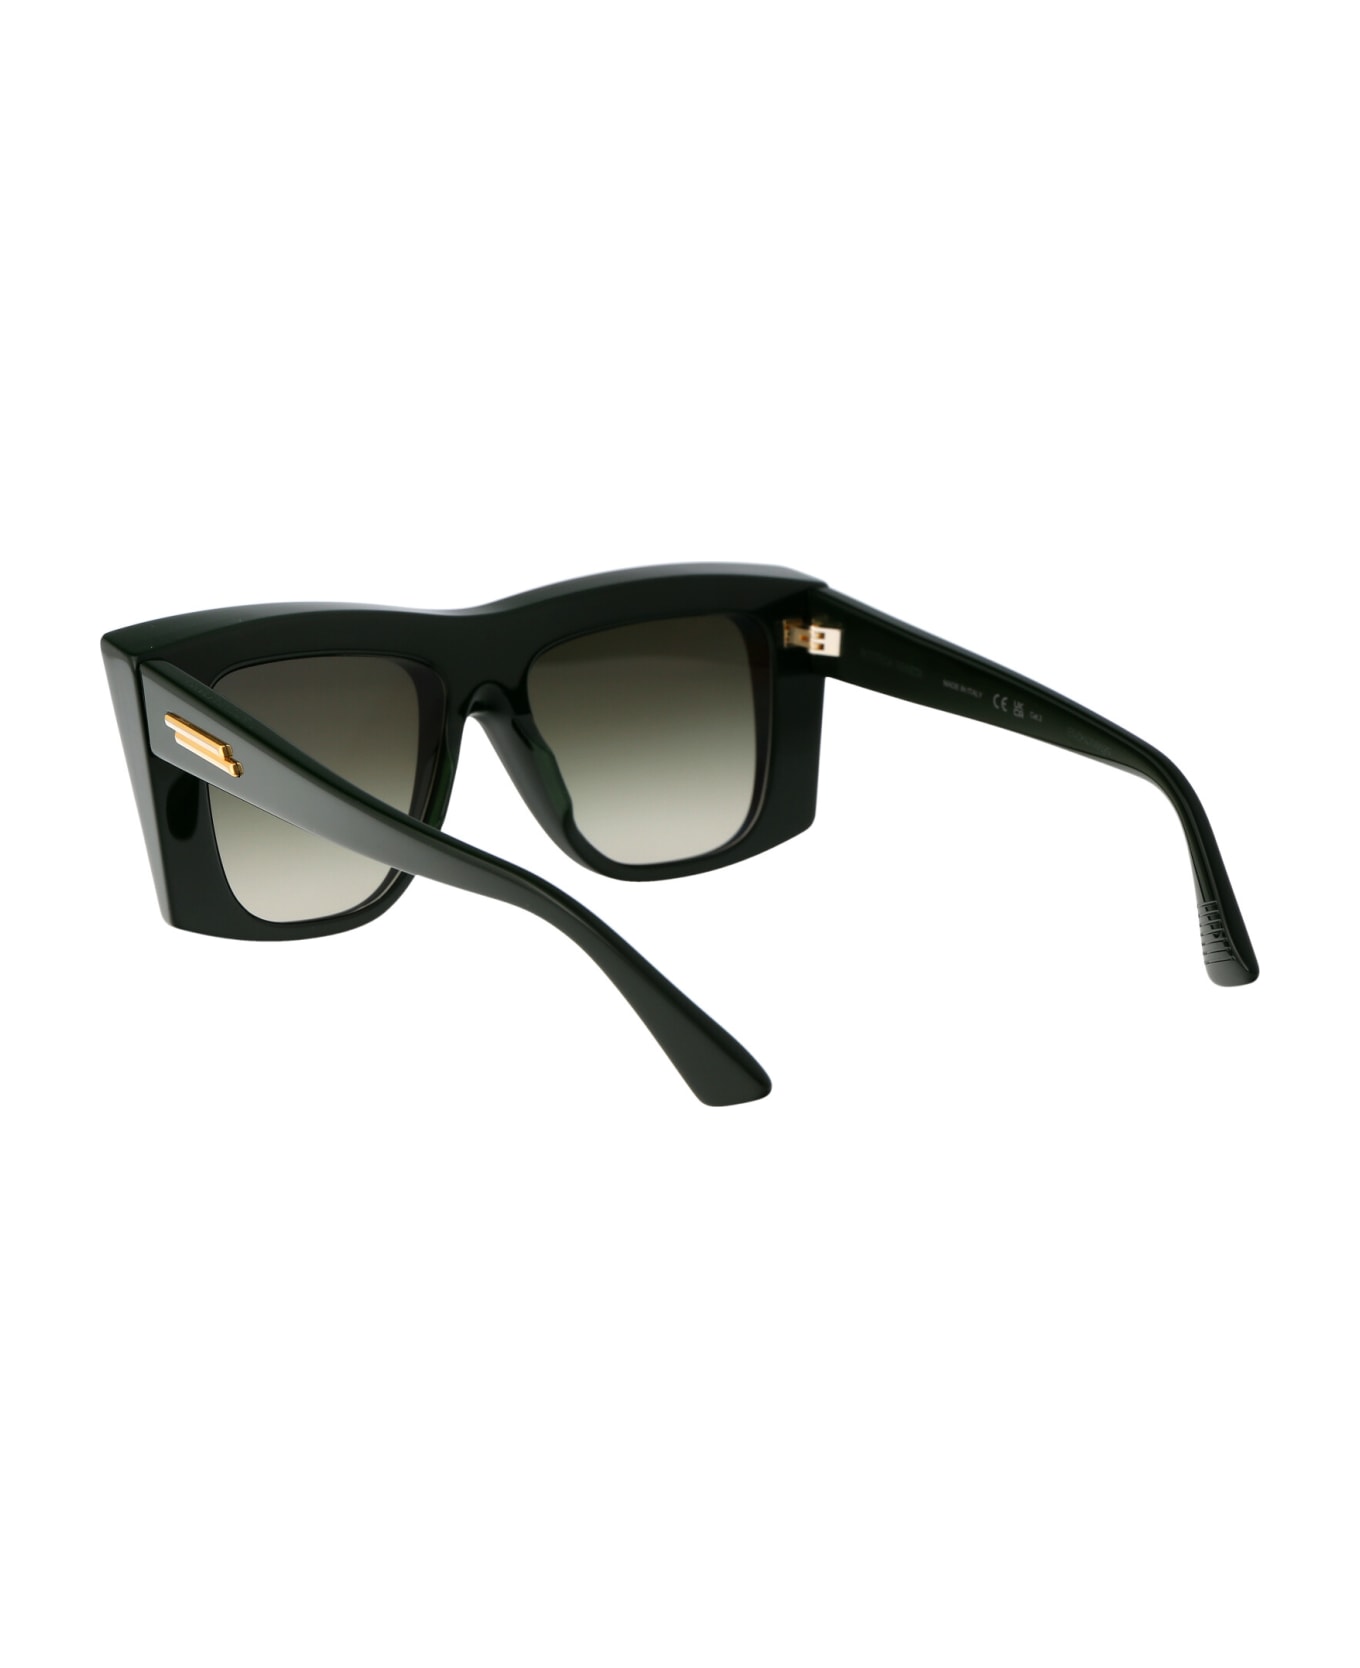 Bottega Veneta Eyewear Bv1270s Sunglasses - 004 GREEN GREEN GREEN